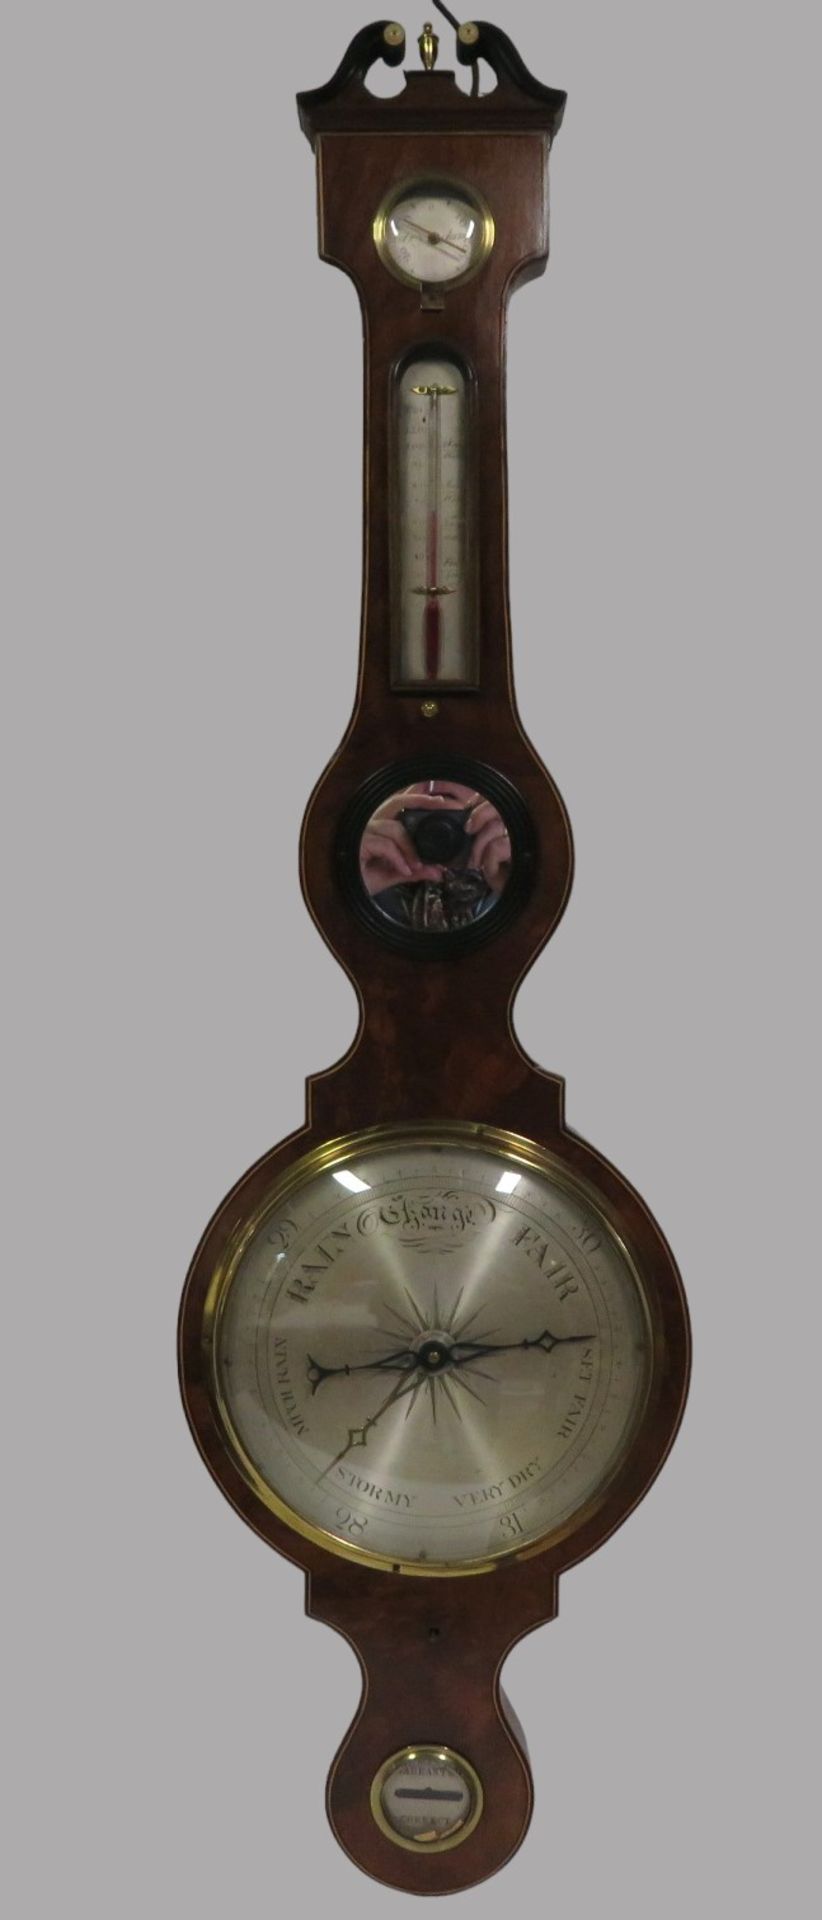 Quecksilber Barometer, England, 19. Jahrhundert, Gehäuse Mahagoni mit Bandintarsien, intakt, l 109